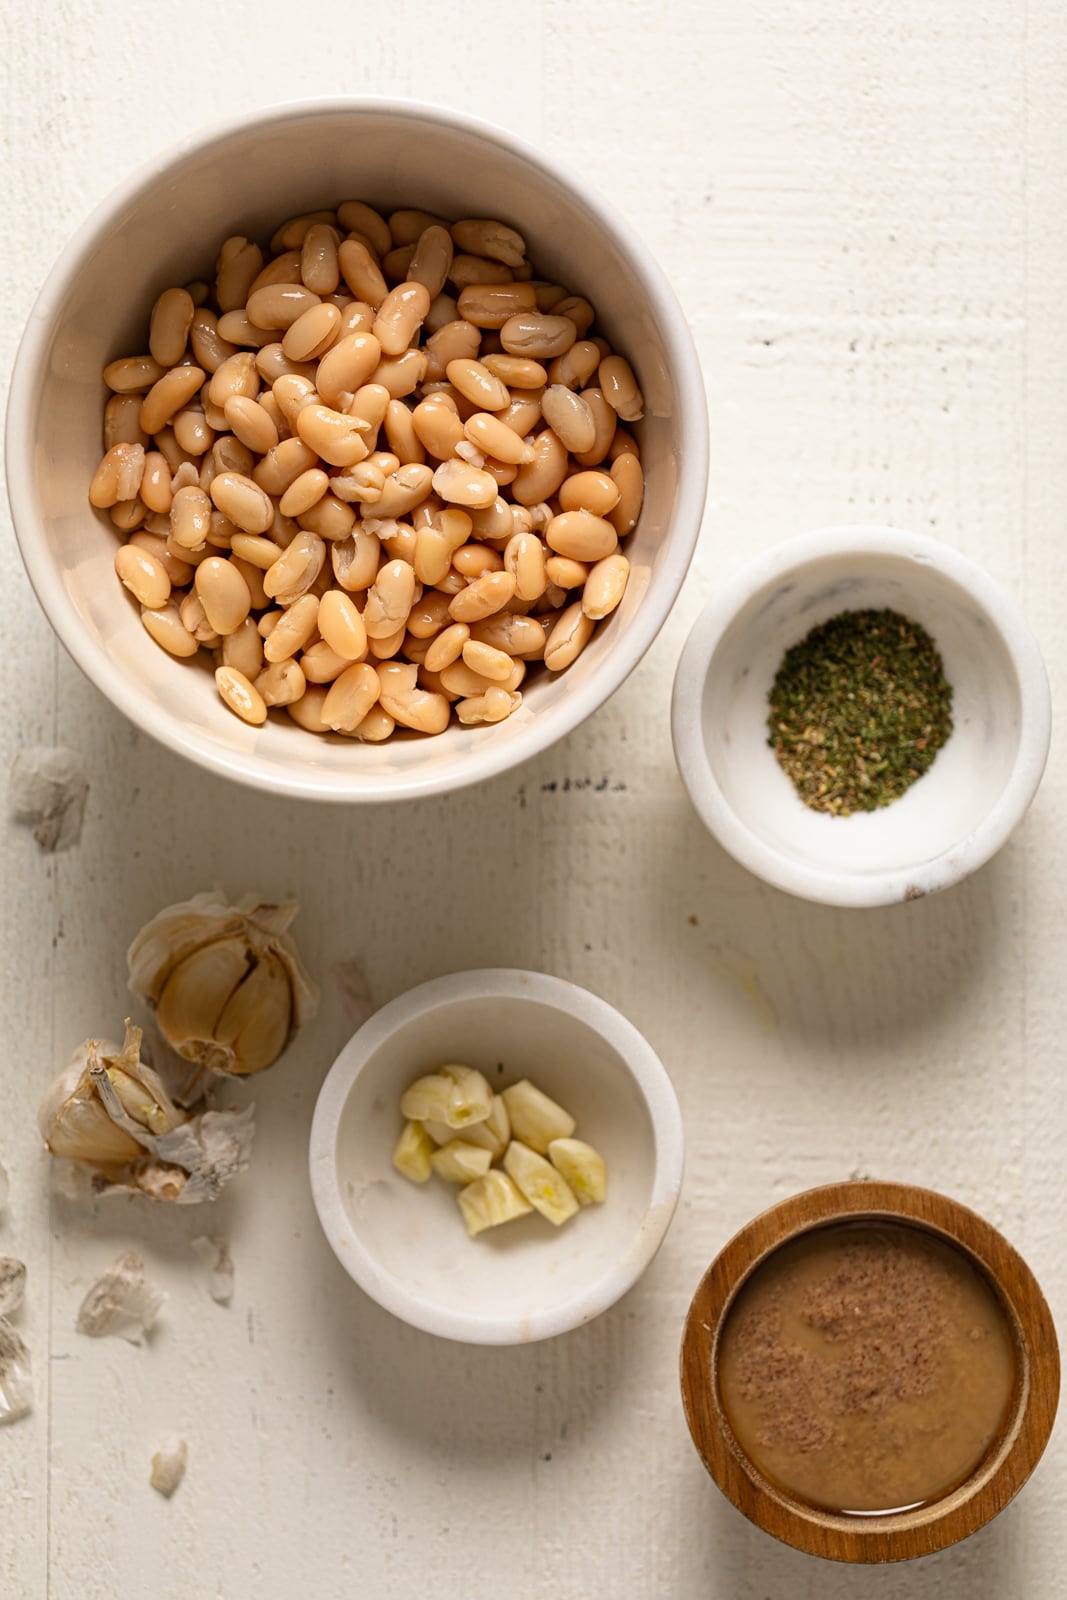 Ingredients for Garlic Herb Three Bean Dip including beans, garlic, and seasonings